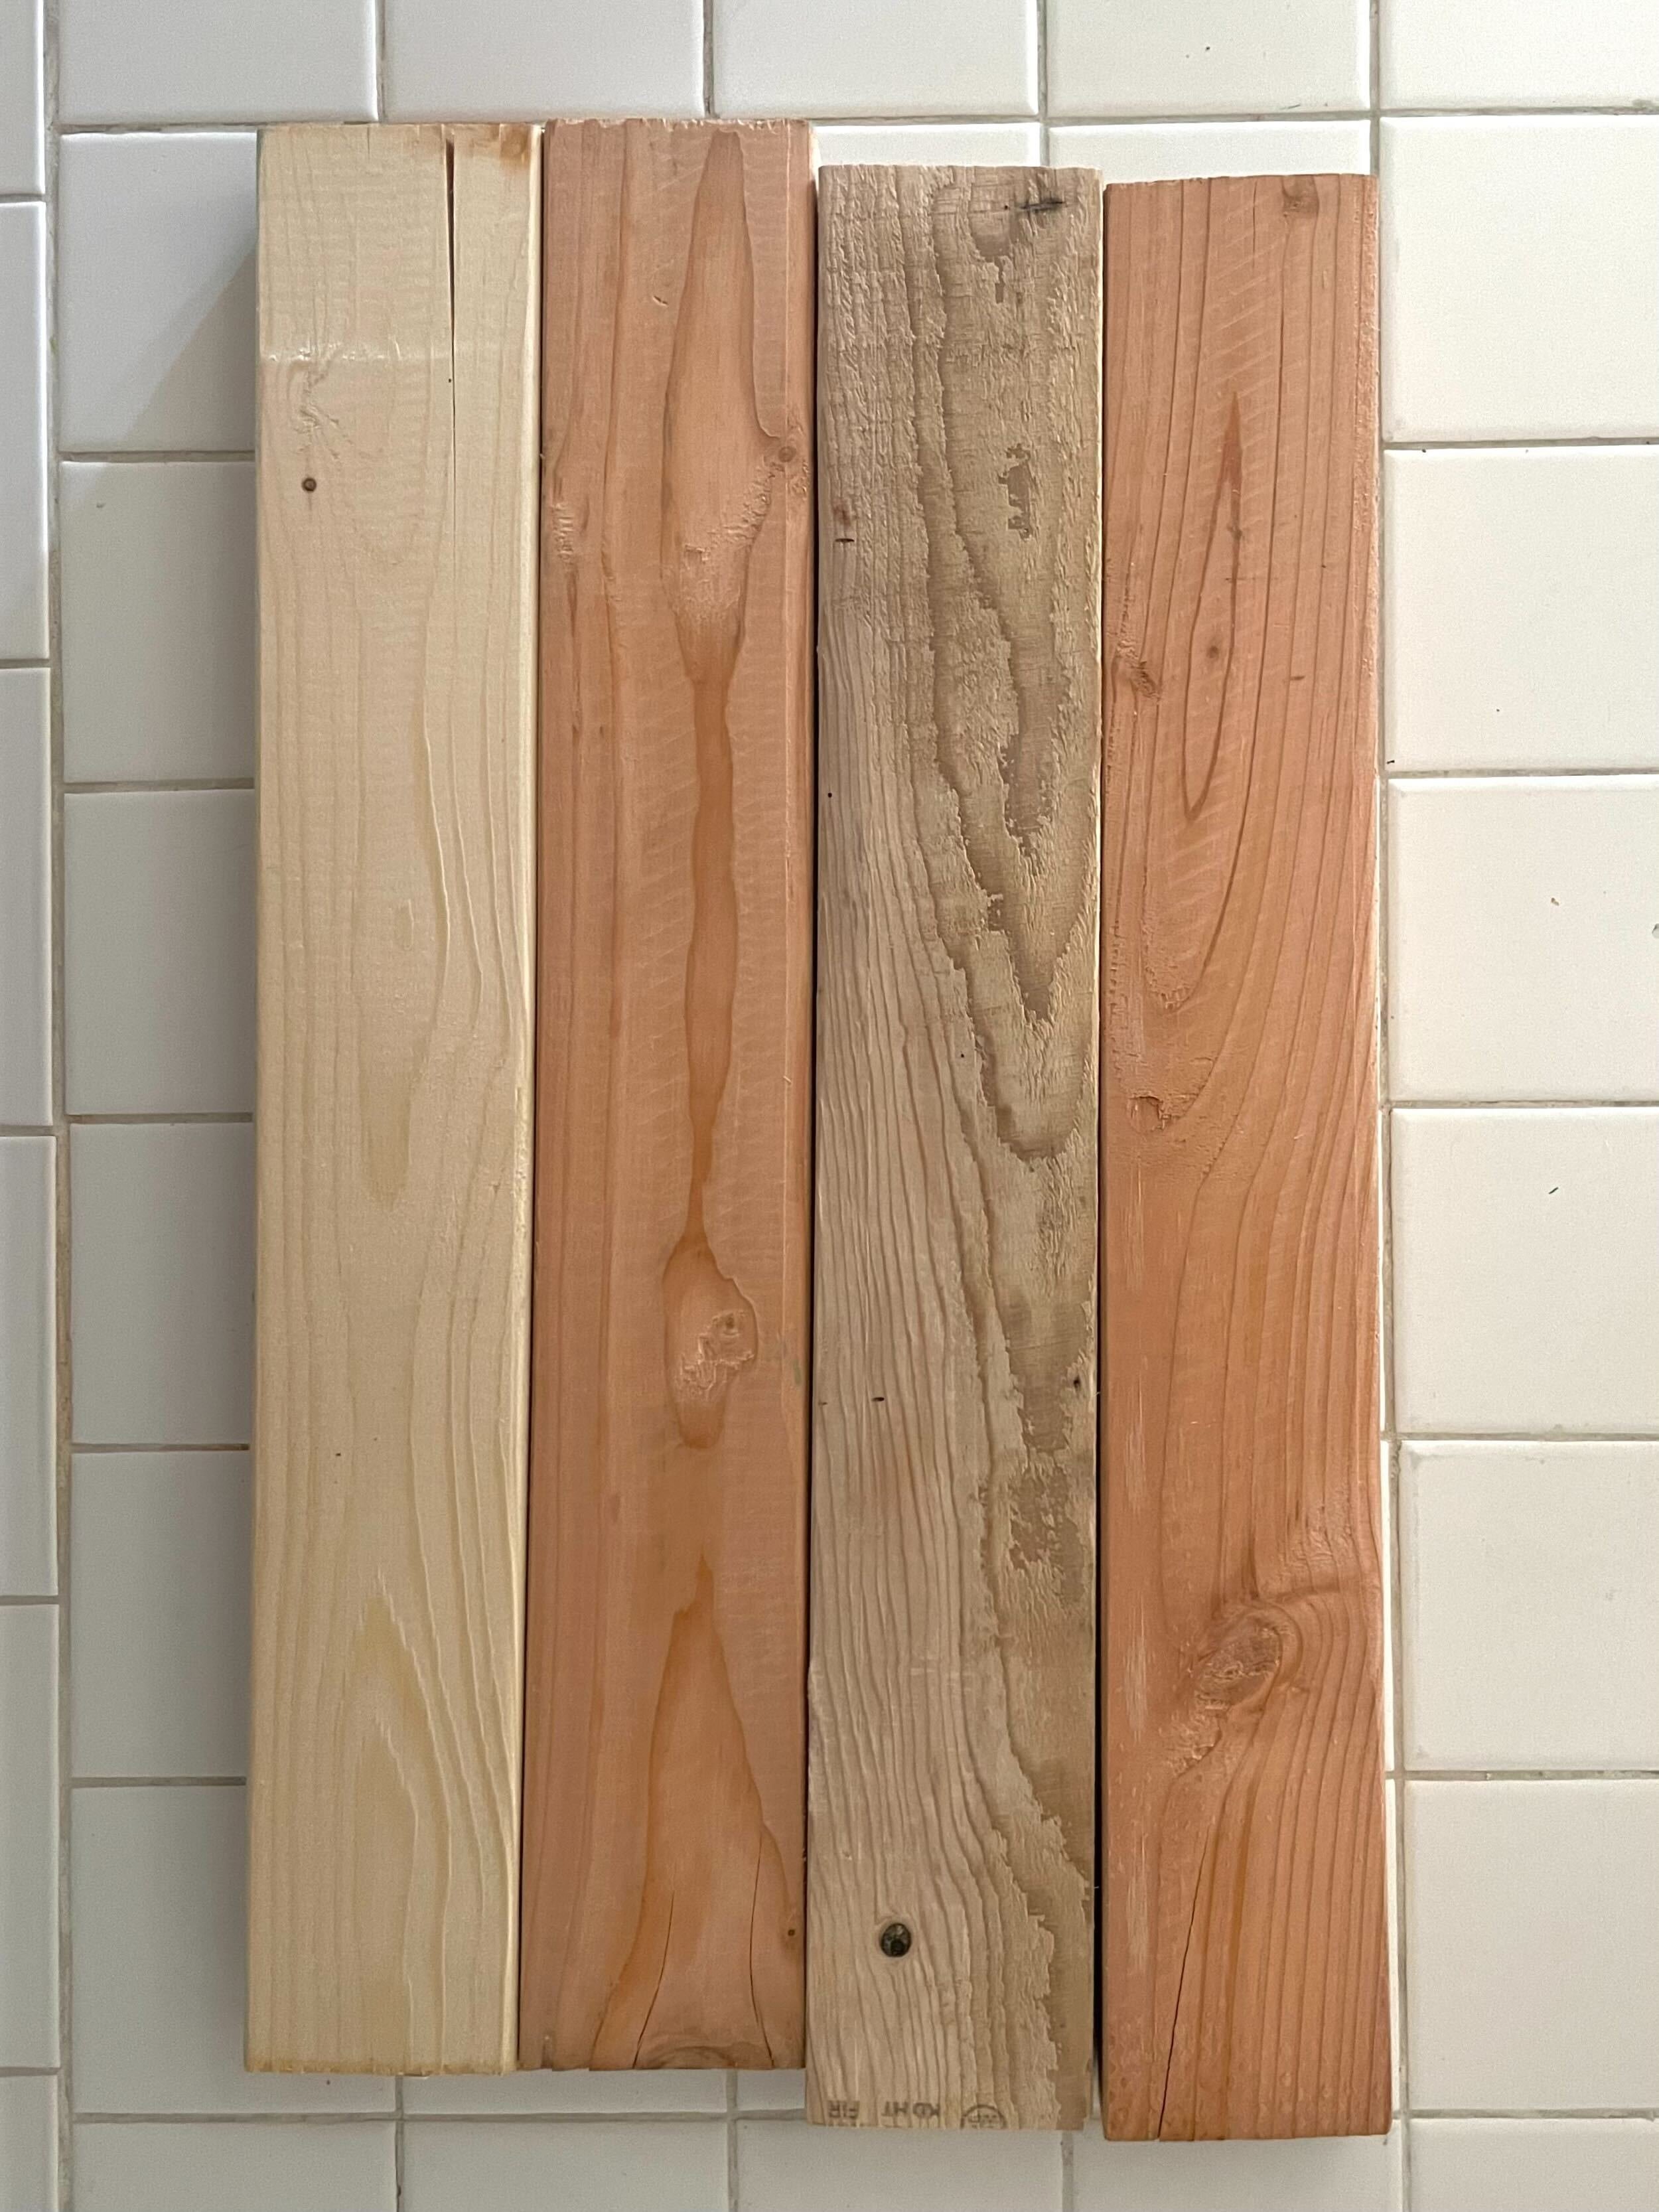 4 Planks of Wood